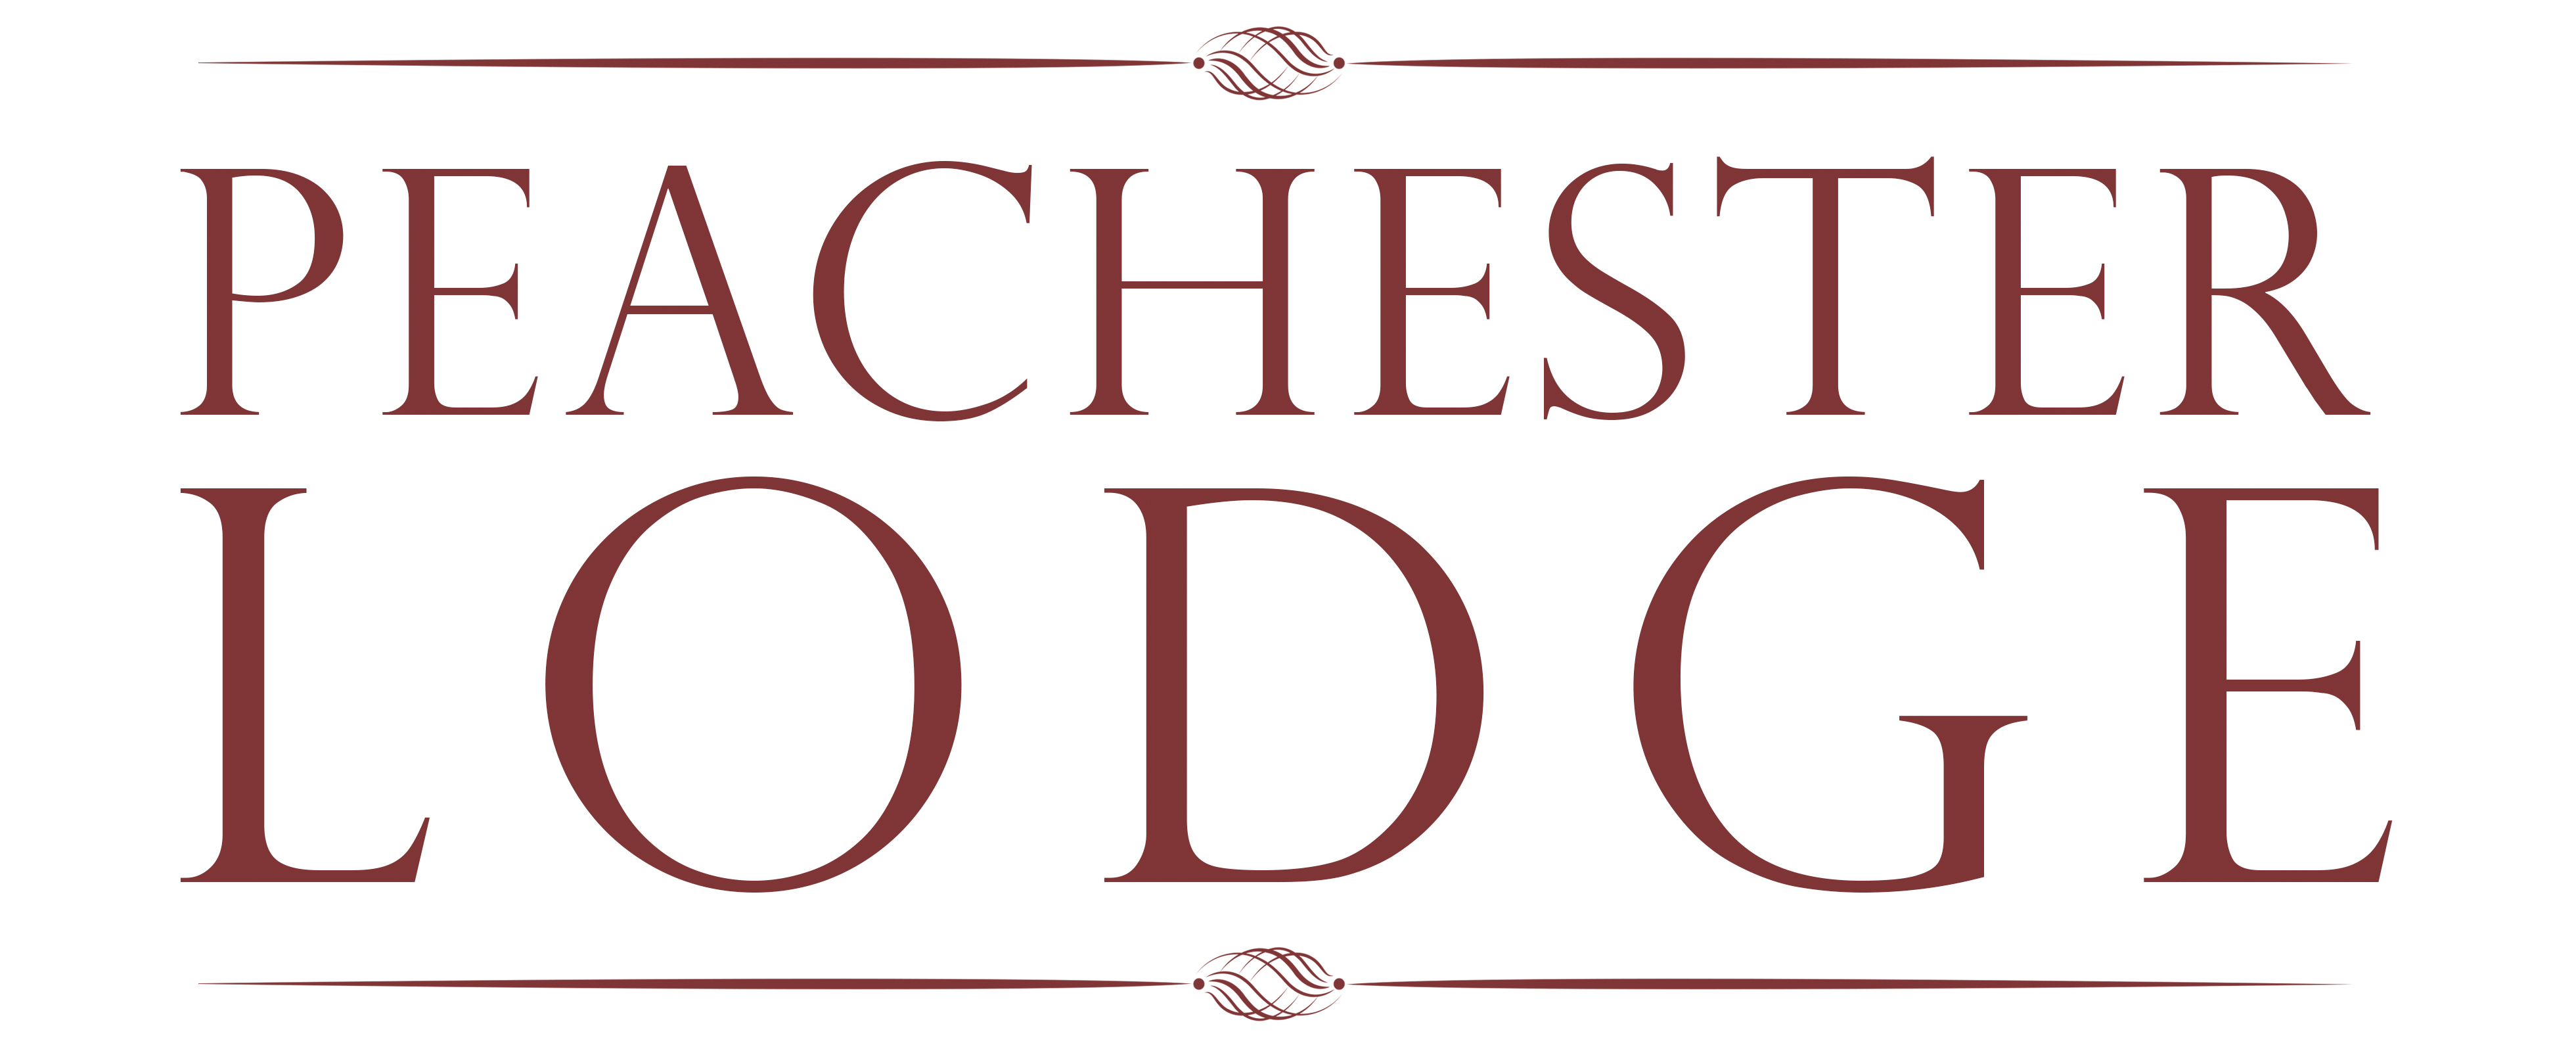 Peachester Lodge Logo